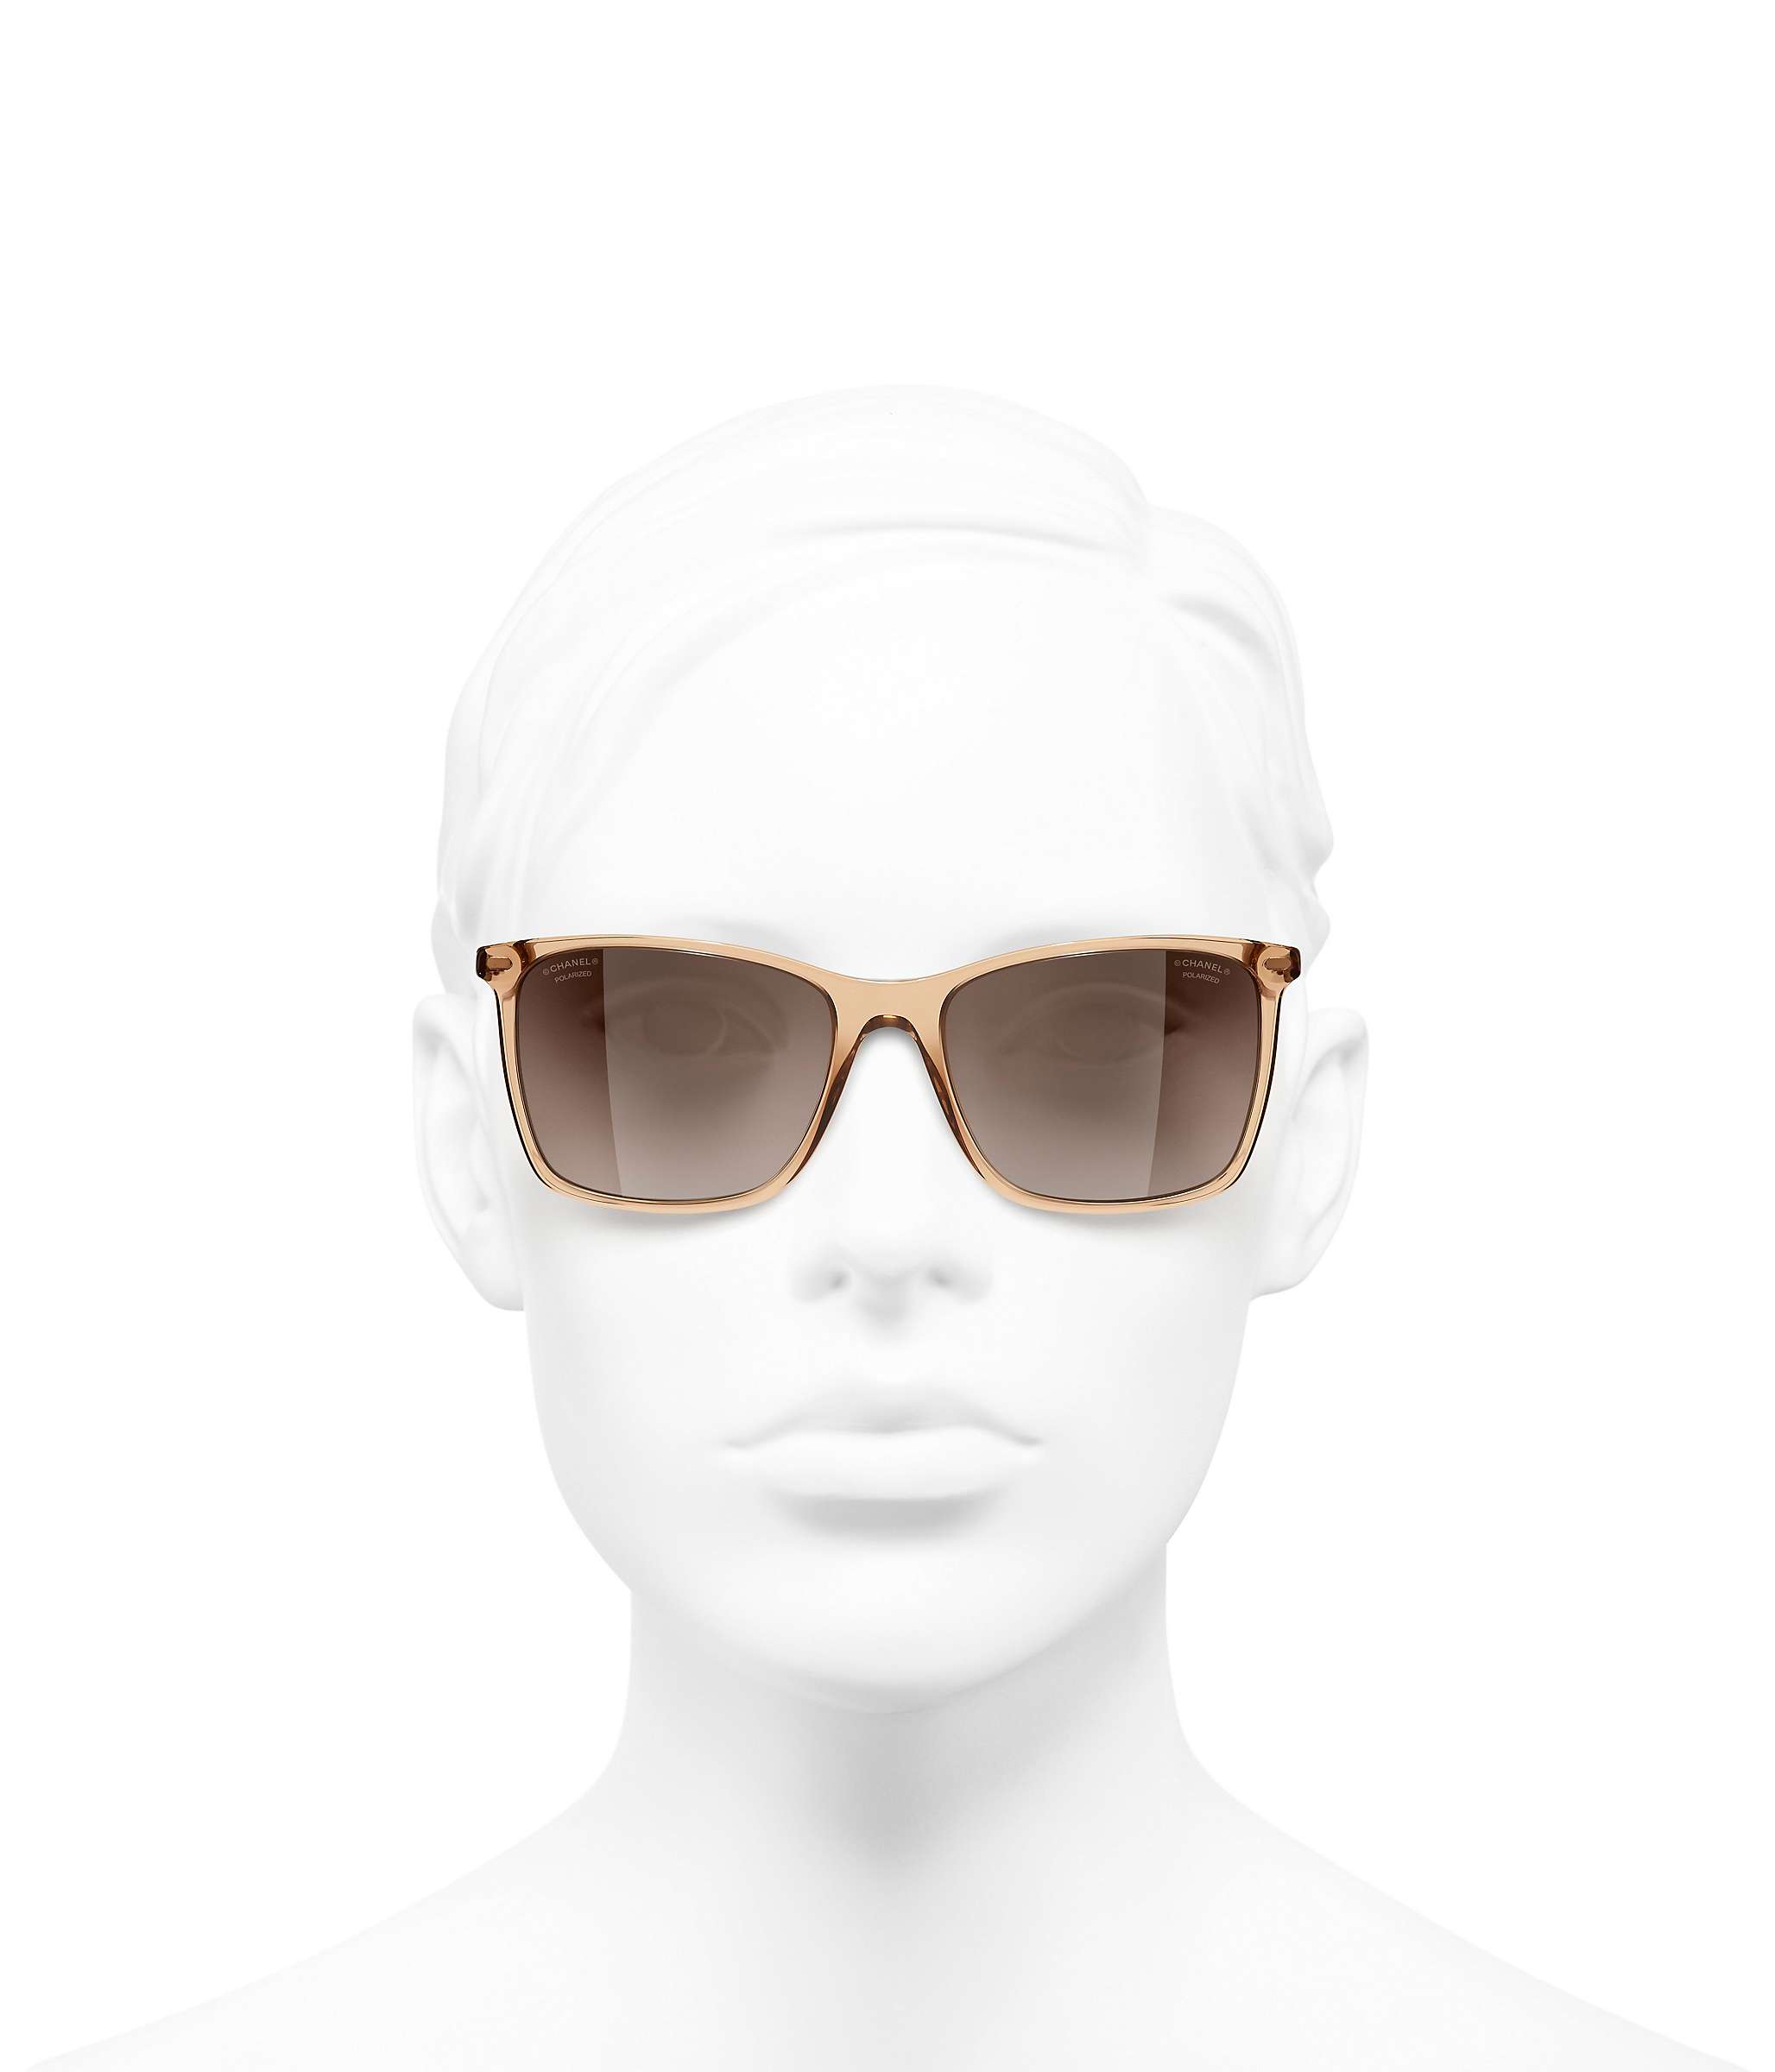 Buy CHANEL Rectangular Sunglasses CH5447 Light Brown/Brown Gradient Online at johnlewis.com